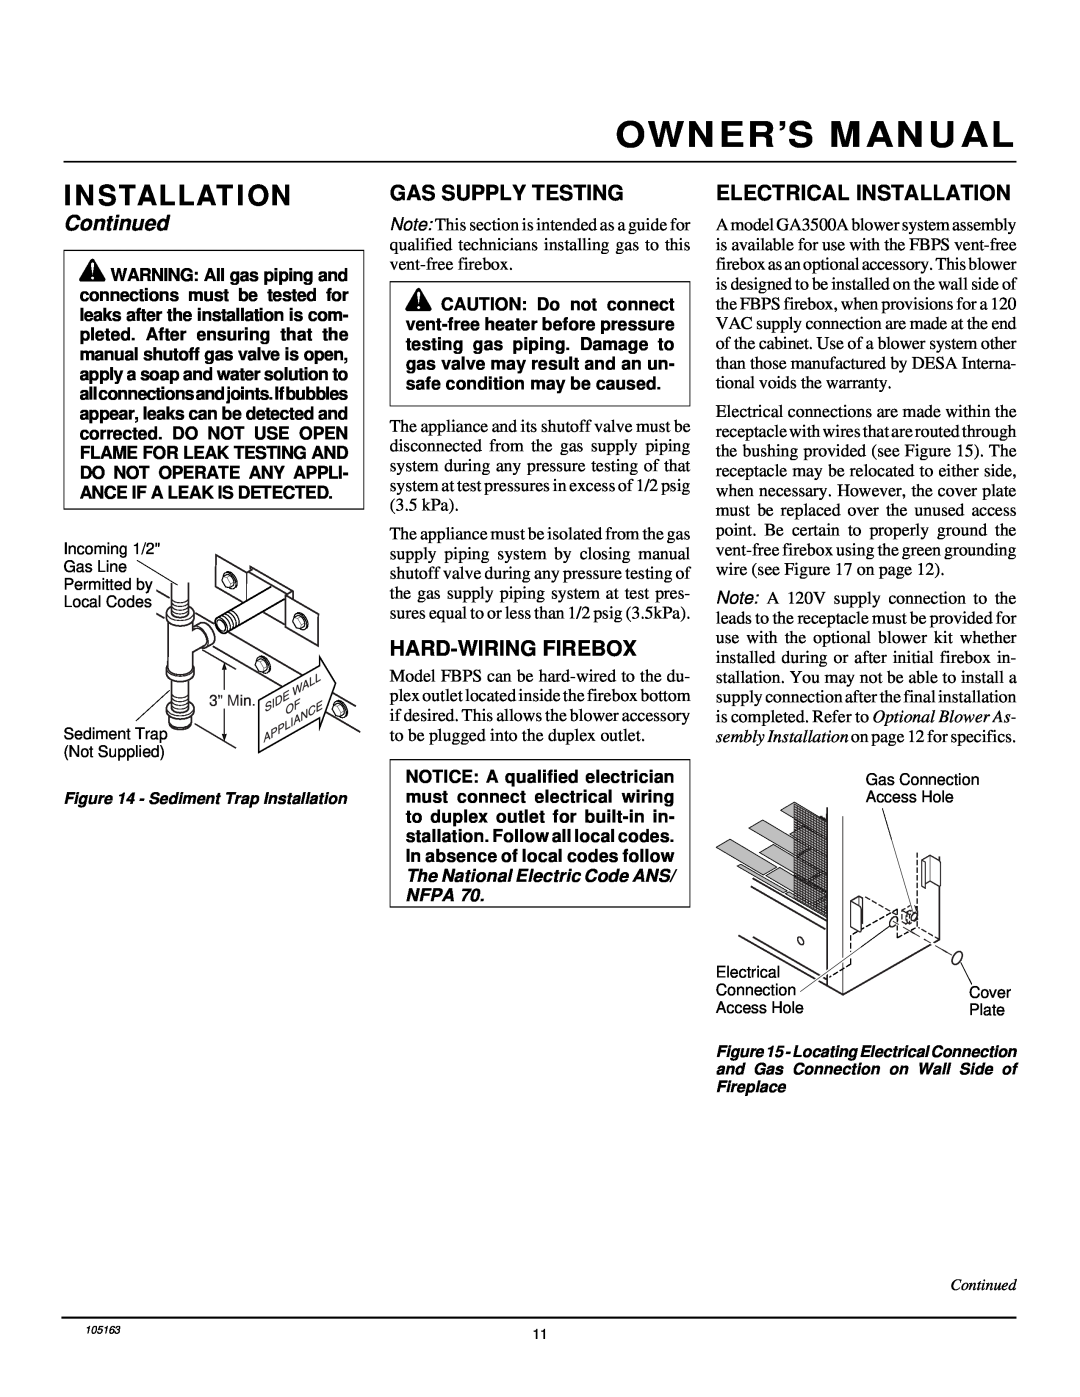 Desa FBPS Continued, Gas Supply Testing, Hard-Wiringfirebox, Electrical Installation, Sediment Trap Installation 